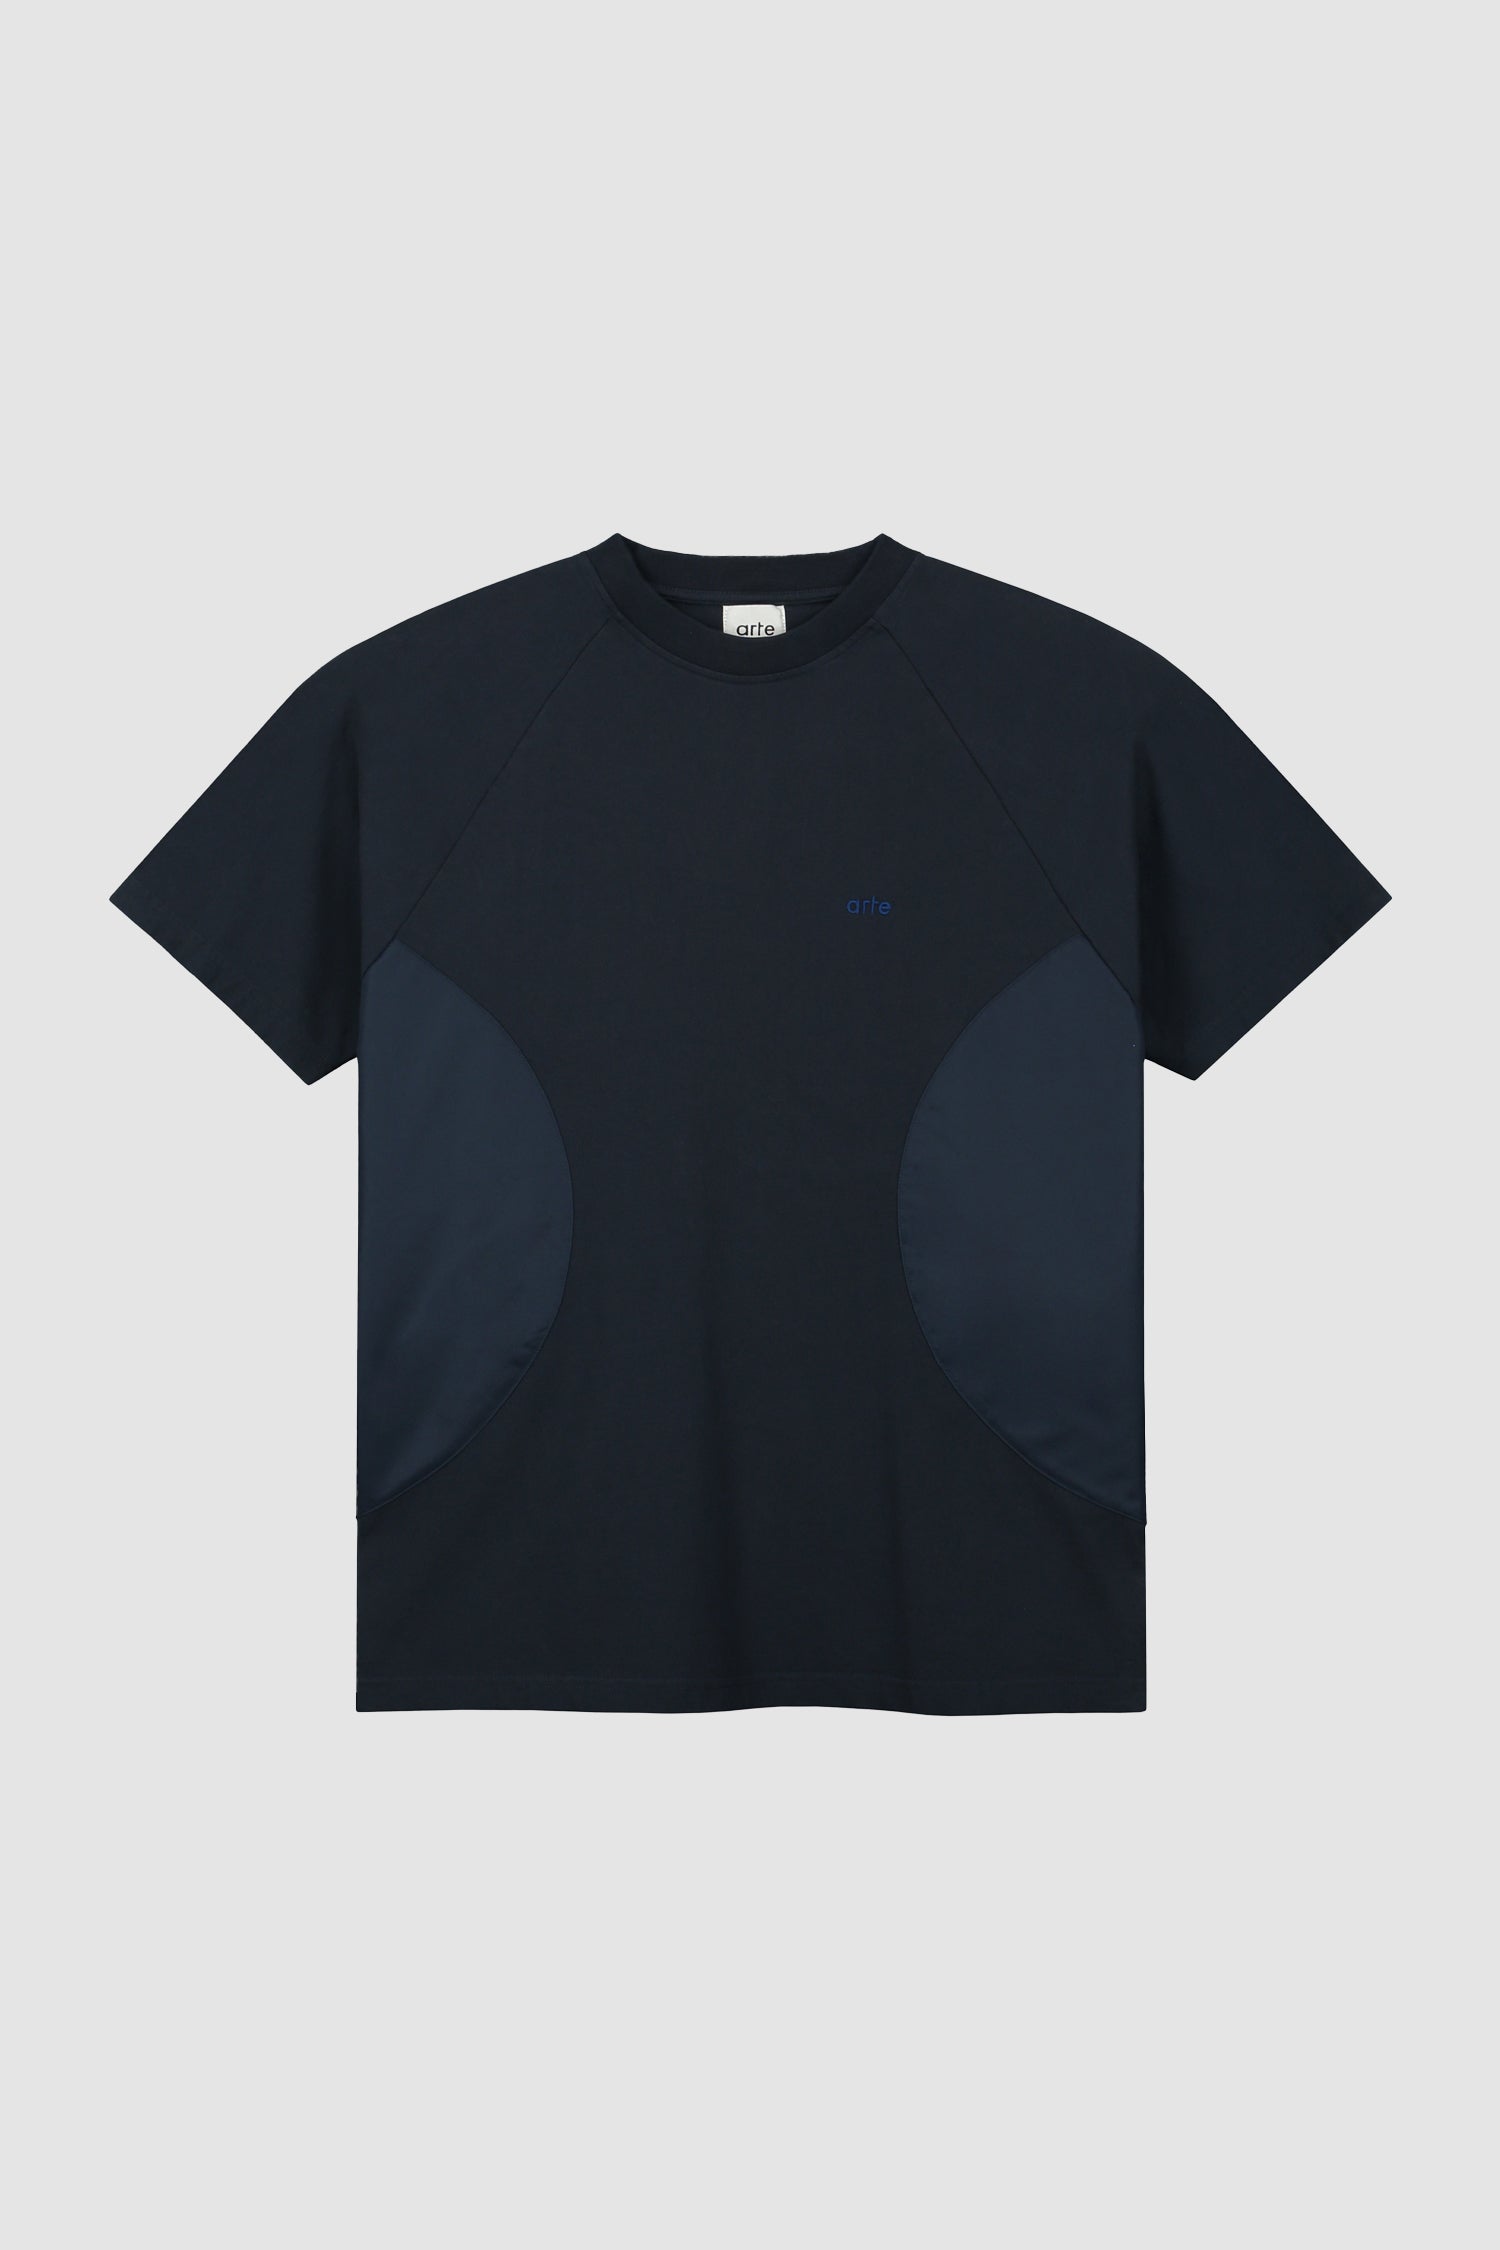 Theo W Cuts T-shirt - Navy